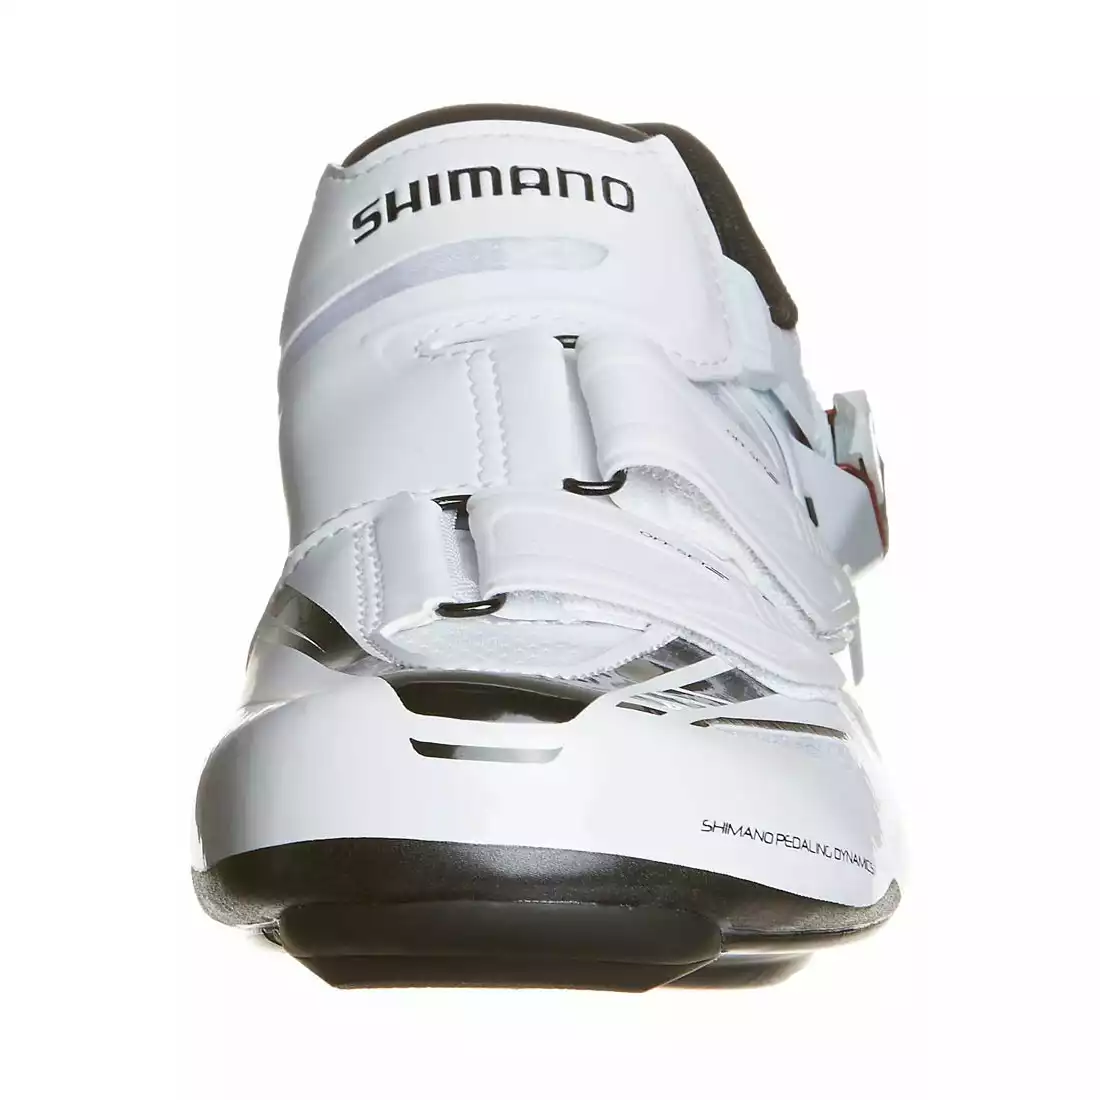 SHIMANO SH-R170W  - buty szosowe, kolor: Biały